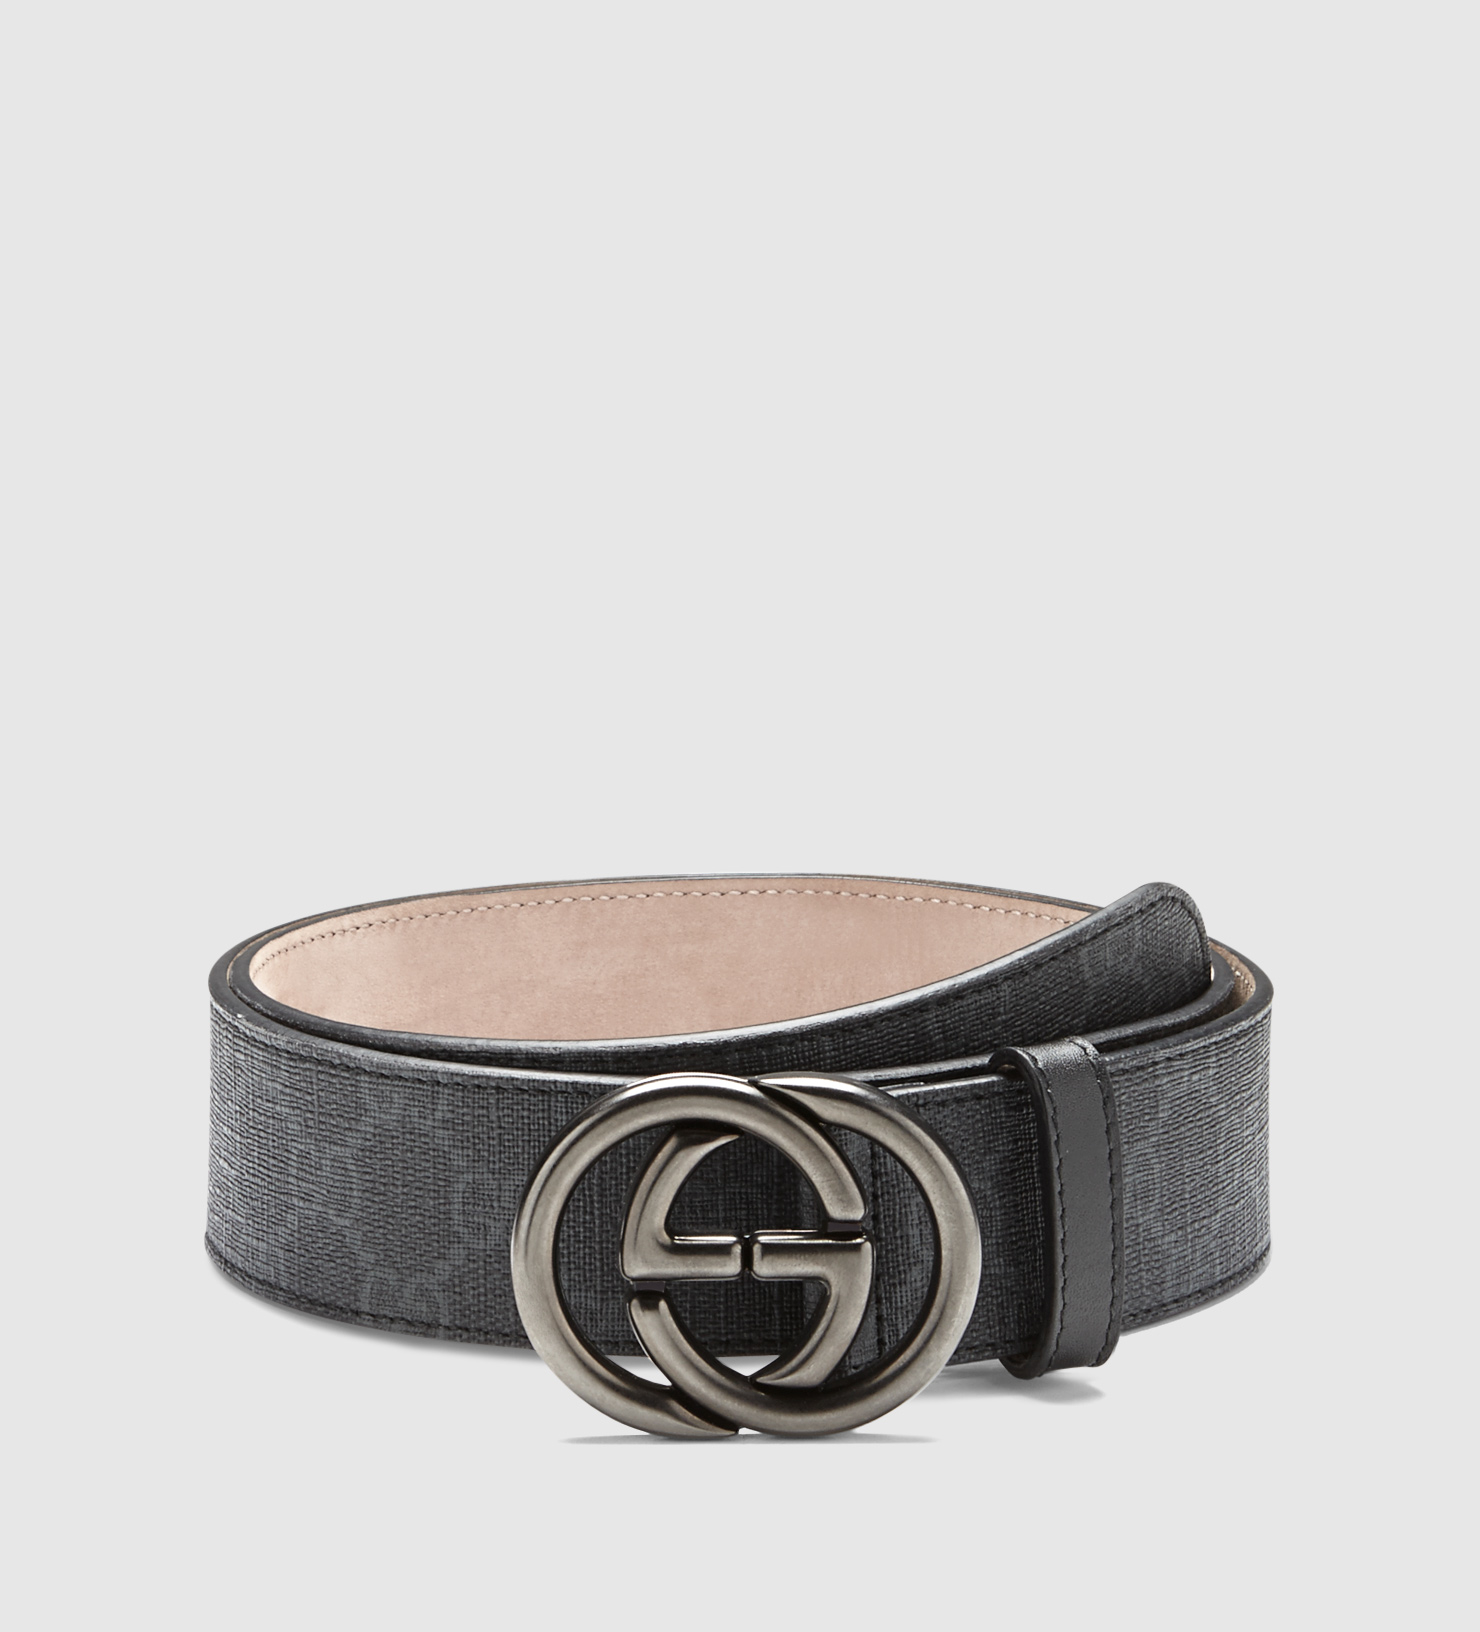 Lyst - Gucci Gg Supreme Canvas Belt With Interlocking G Buckle in Black for Men